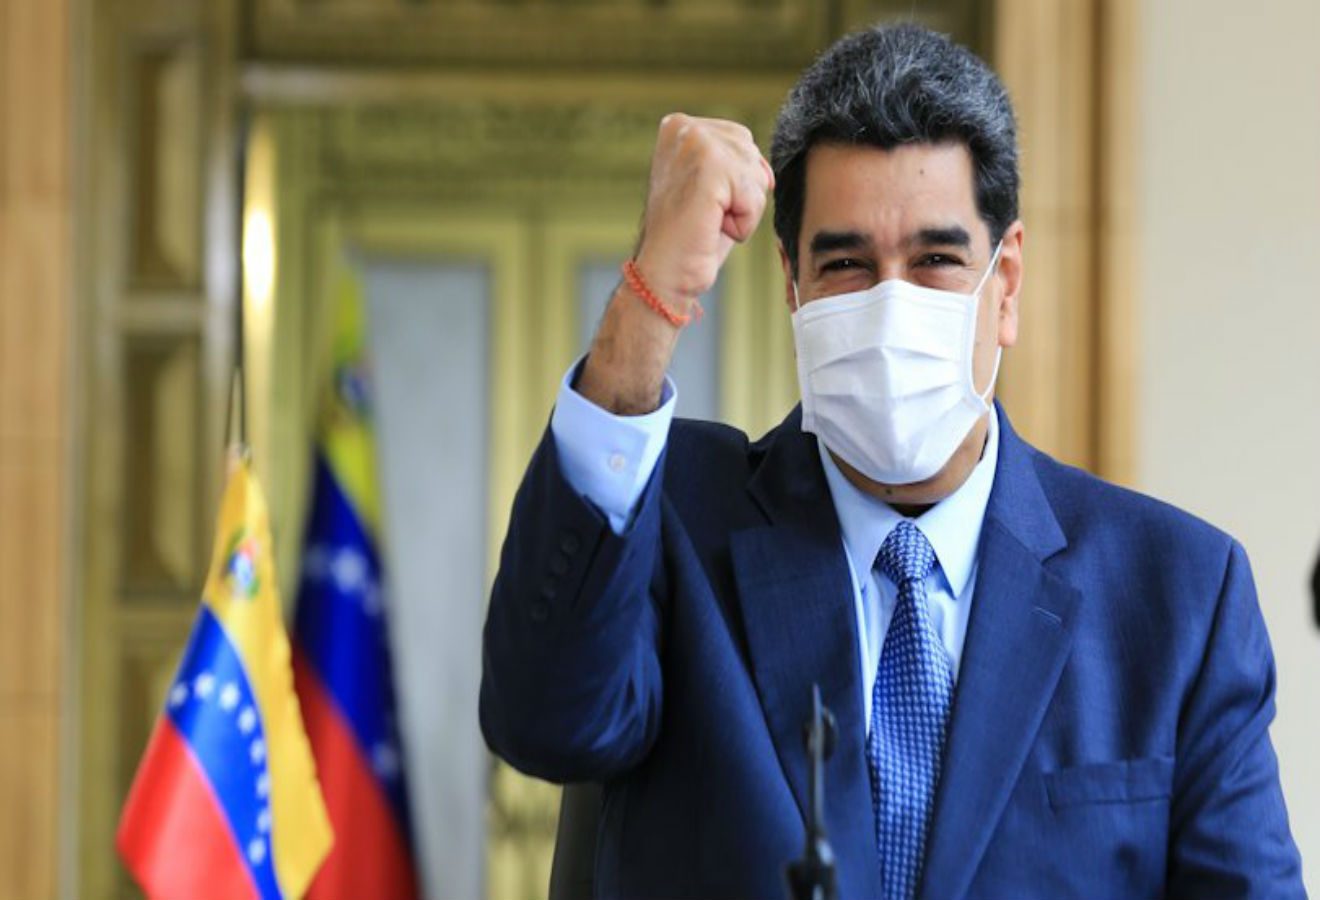 Maduro-ALBA-vacuna